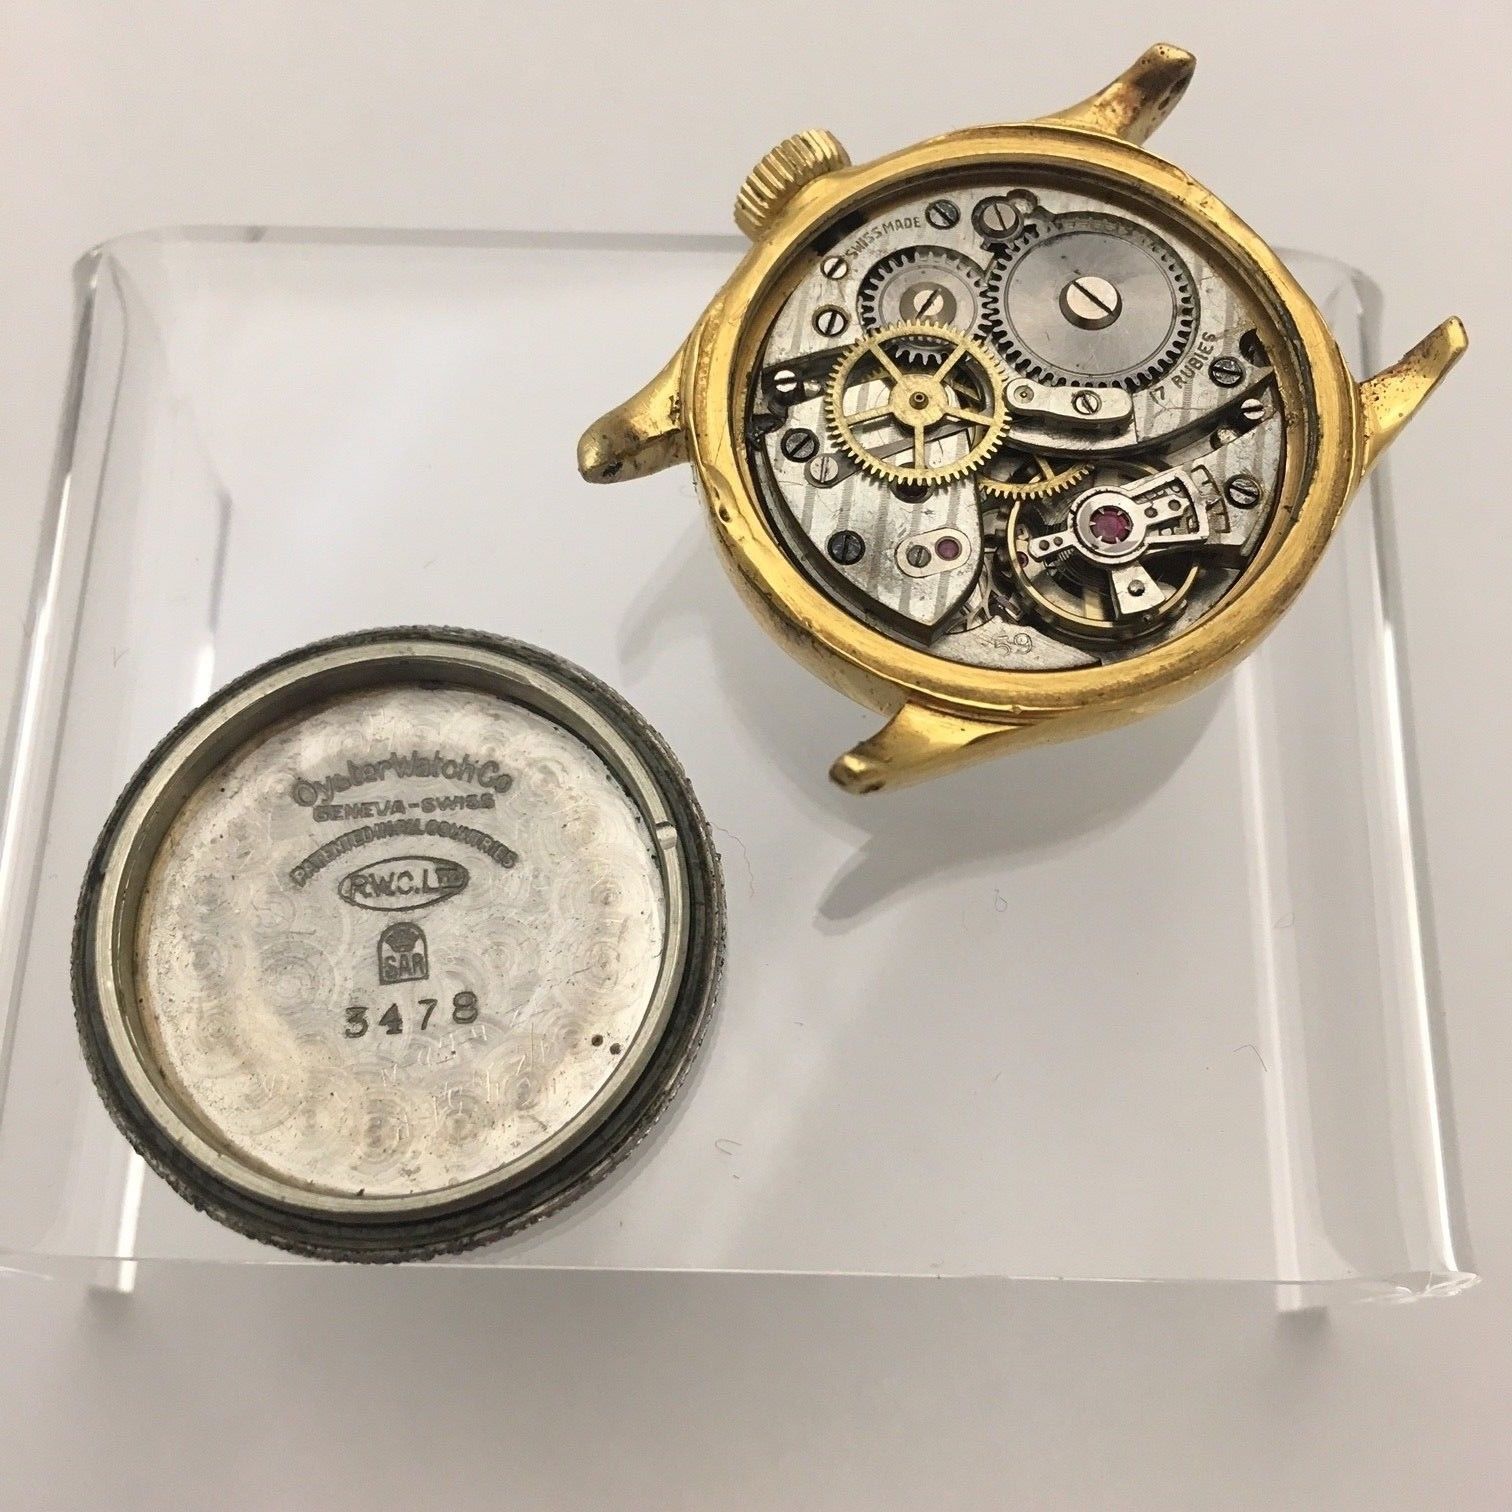 Rolex Oyster Lipton Shock Resisting Watch Ref. 3478 Rare